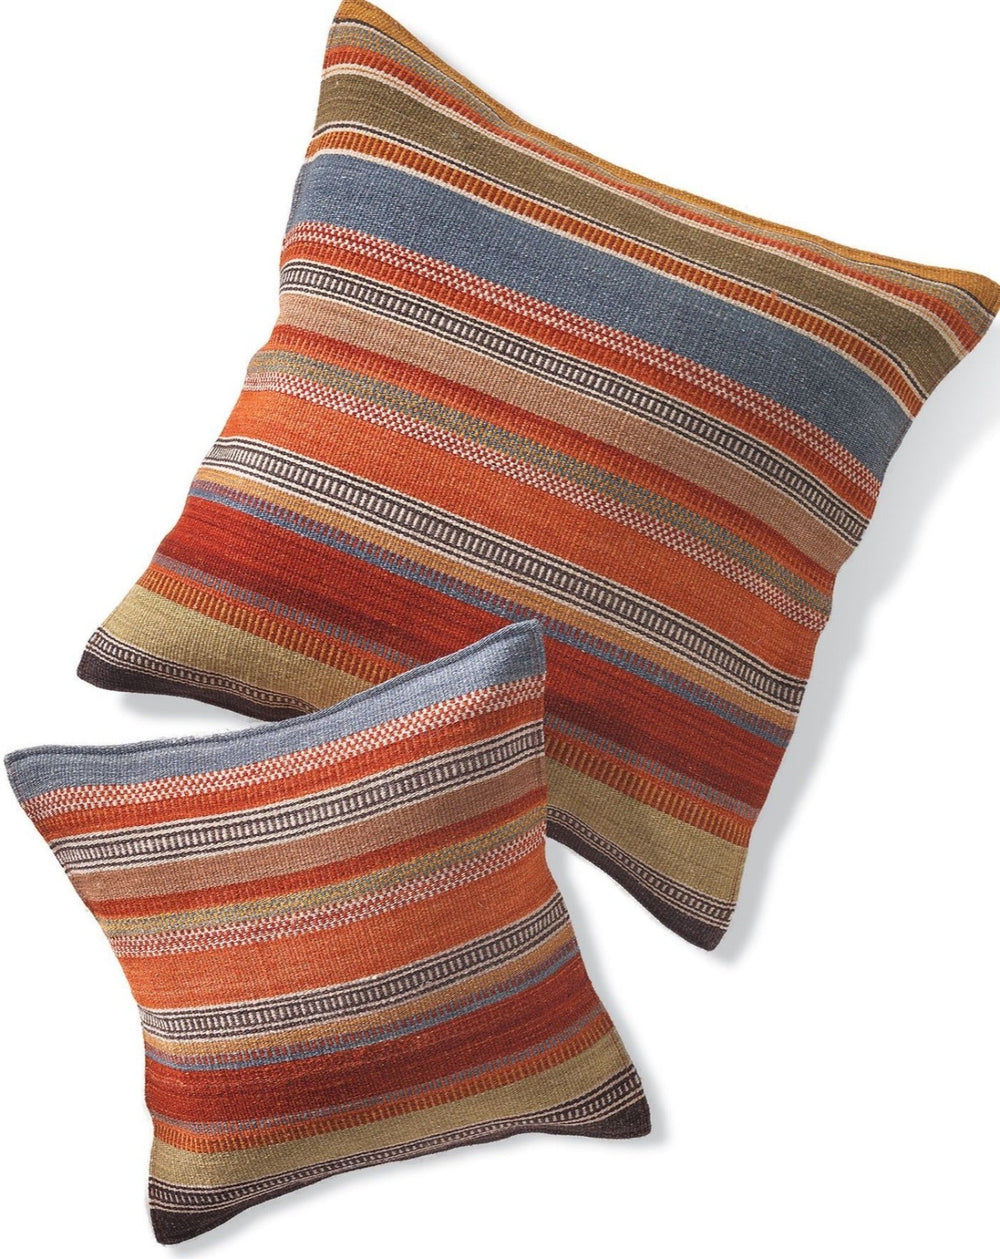 Multi Colour Kilim Cushion Cover Wool Cotton Striped Design Second Nature Online